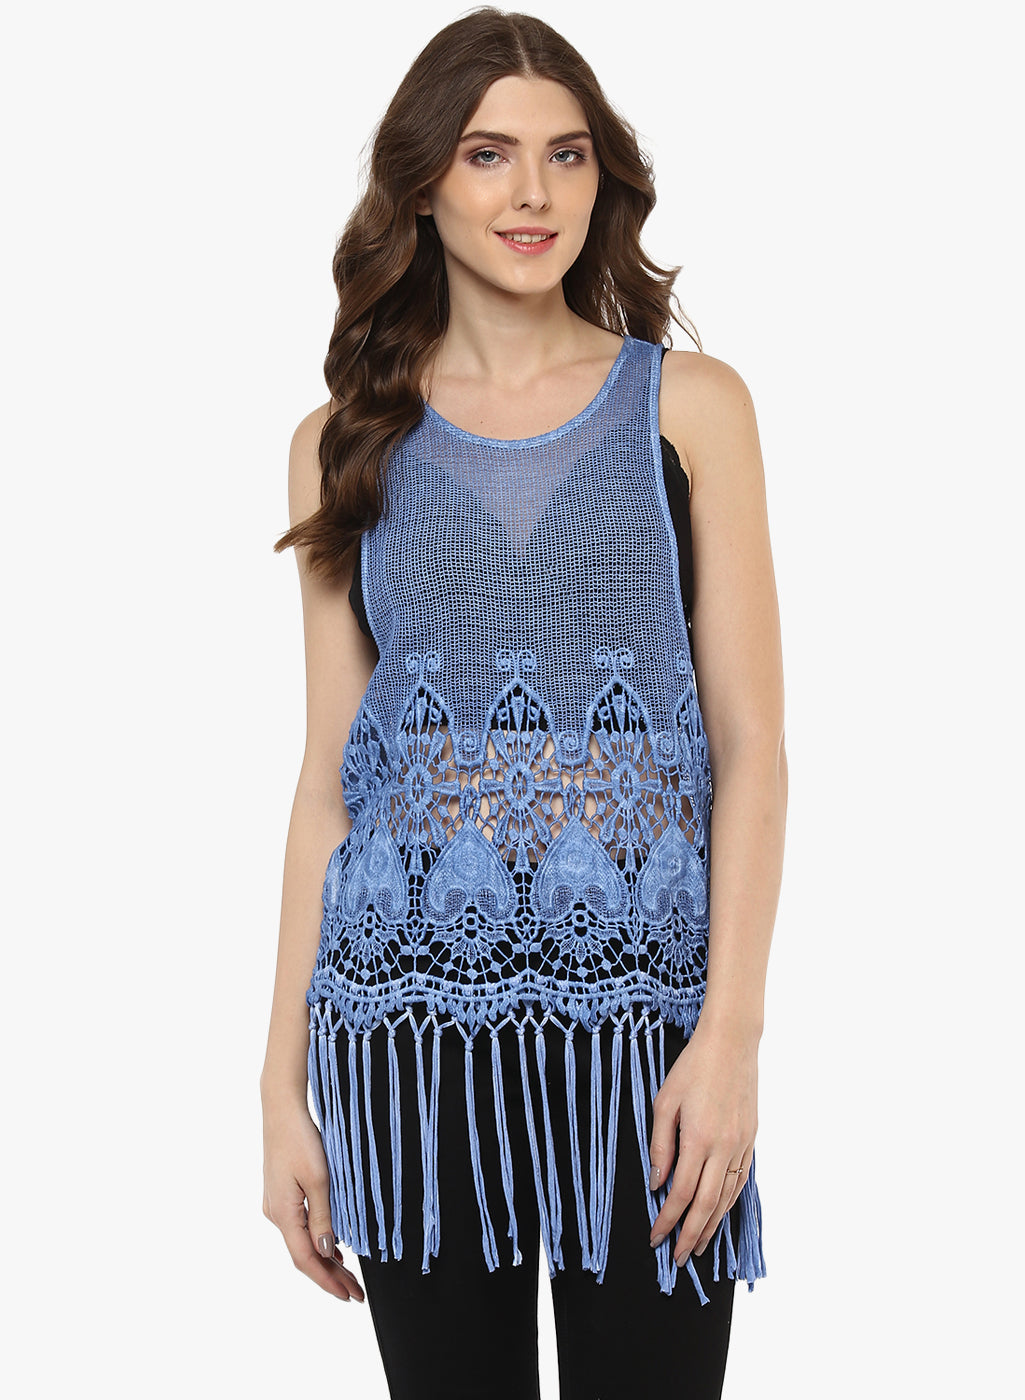 PORSORTE Women's Cotton Blue Pigment washed crochet top with fringes - www.porsorte.in